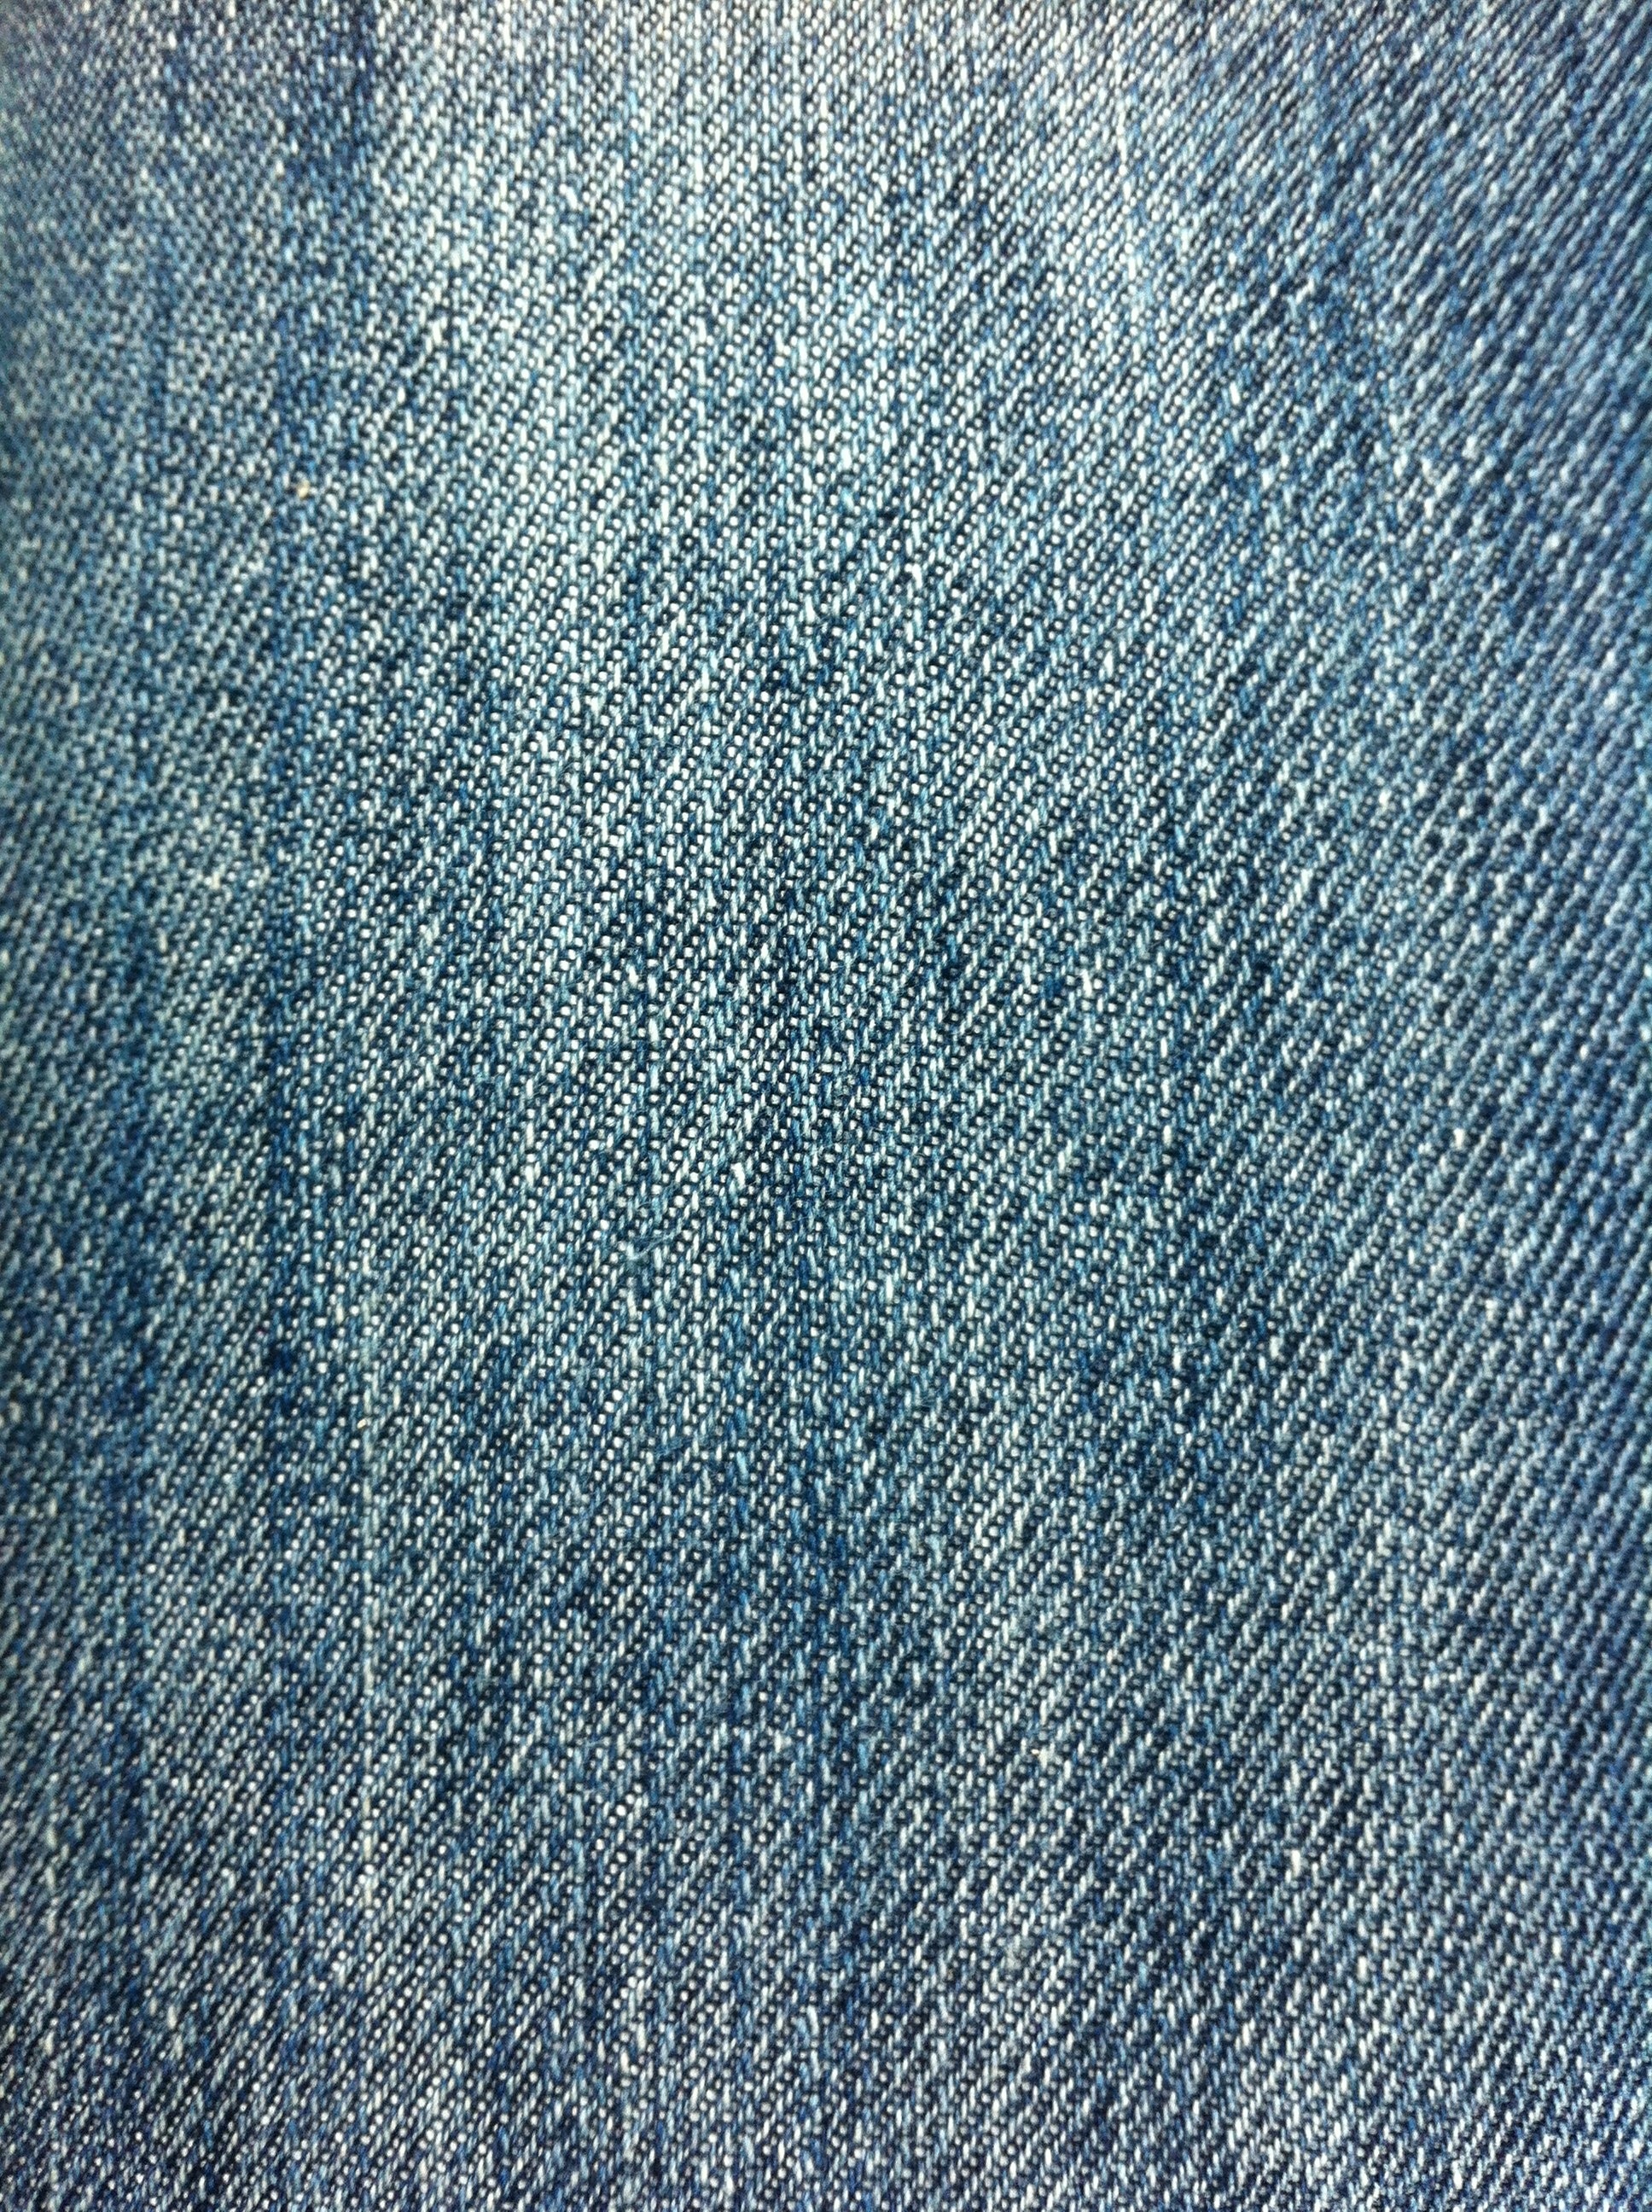 Background, Blue, Jeans, Texture, Denim, textured, jeans